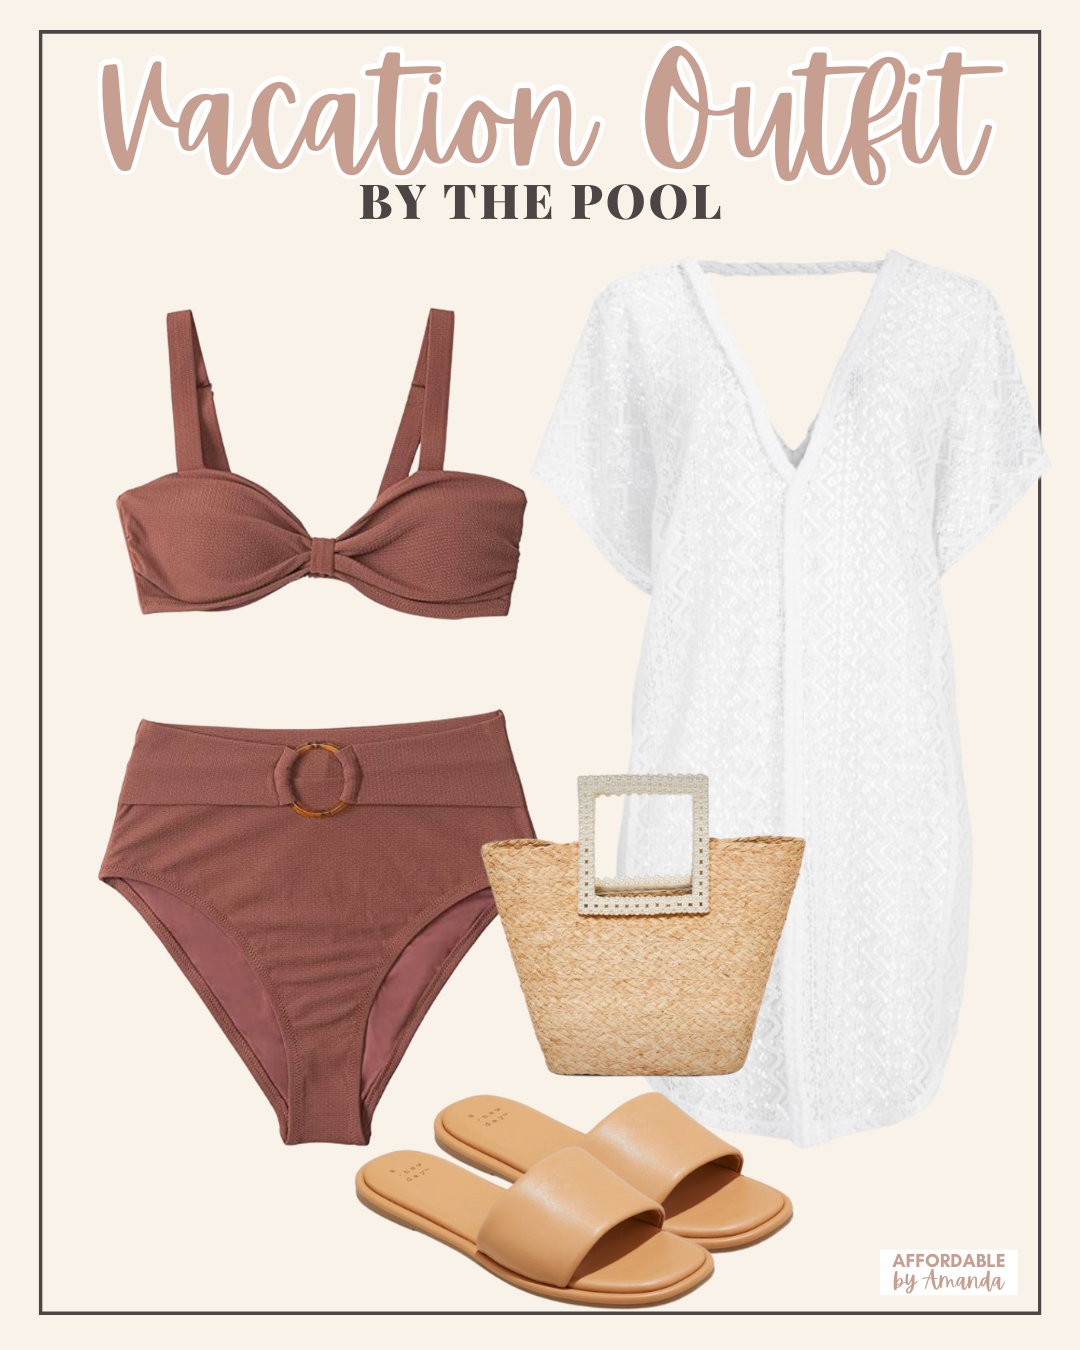 Brown two piece bikini, walmart white crochet cover up, tan beach sandals